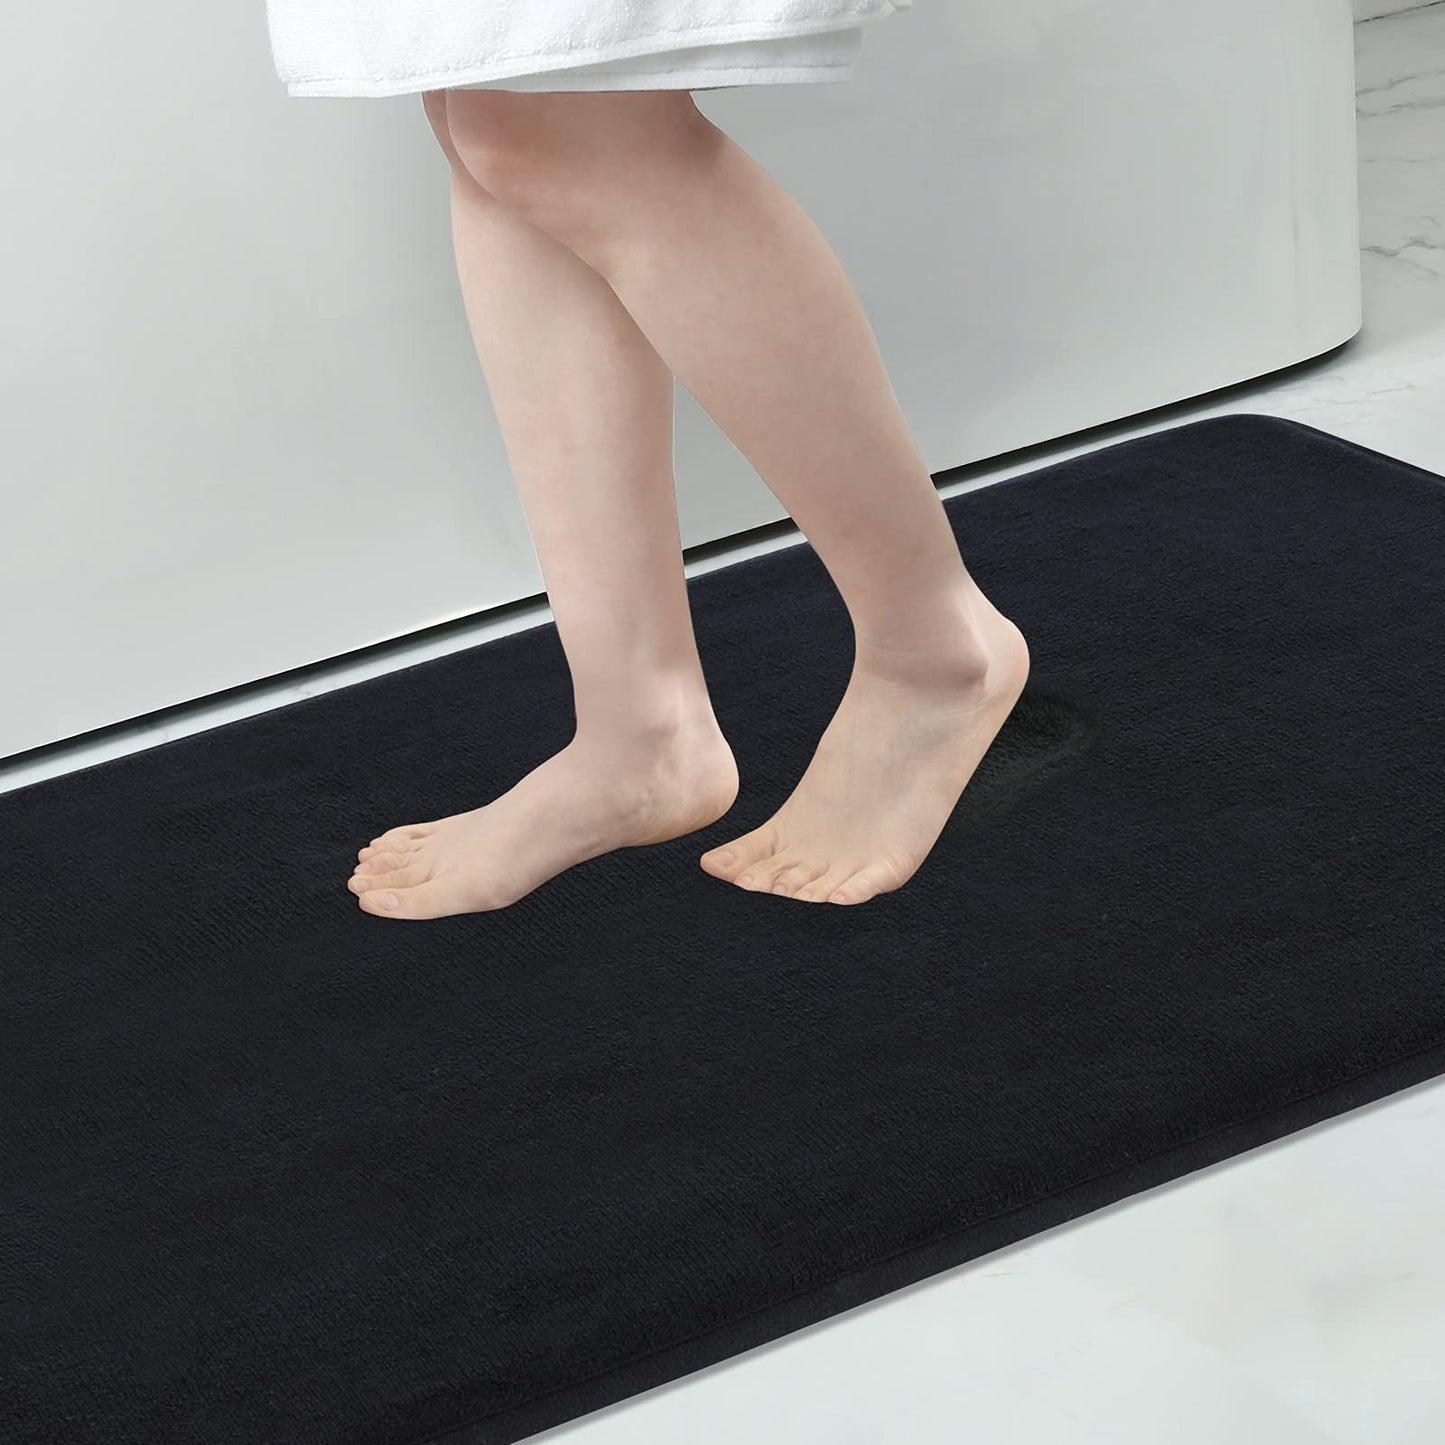 Memory Foam Bath Mat Anti-Slip Shower Carpet Soft Foot Pad Decoration Floor Protector Absorbent Quick Dry Bathroom Rug Mats & Rugs DailyAlertDeals 43x61cm(17x24inch) China black